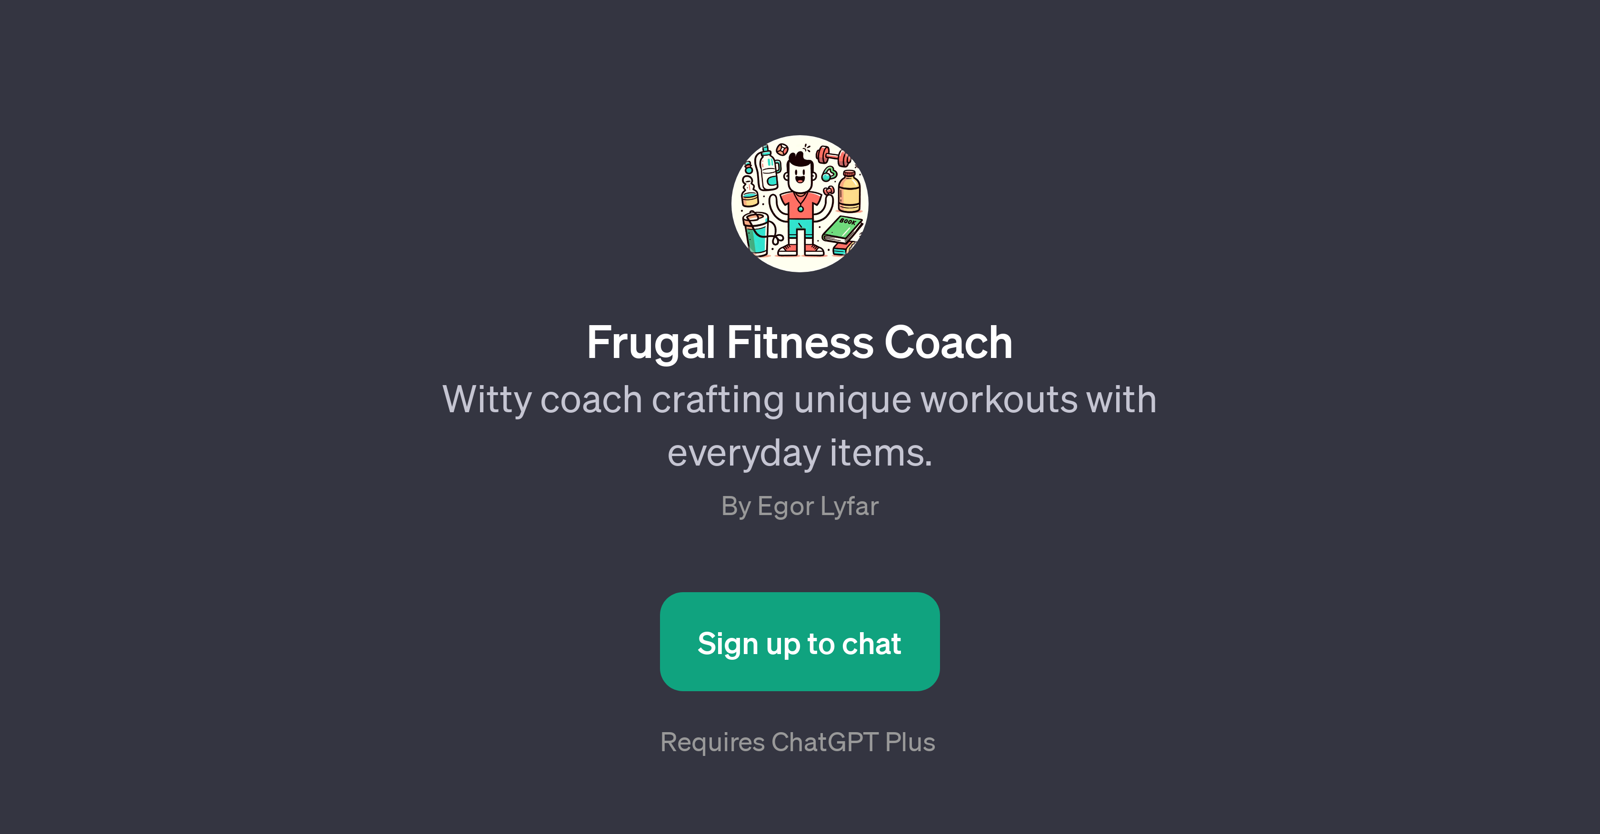 Frugal Fitness Coach website